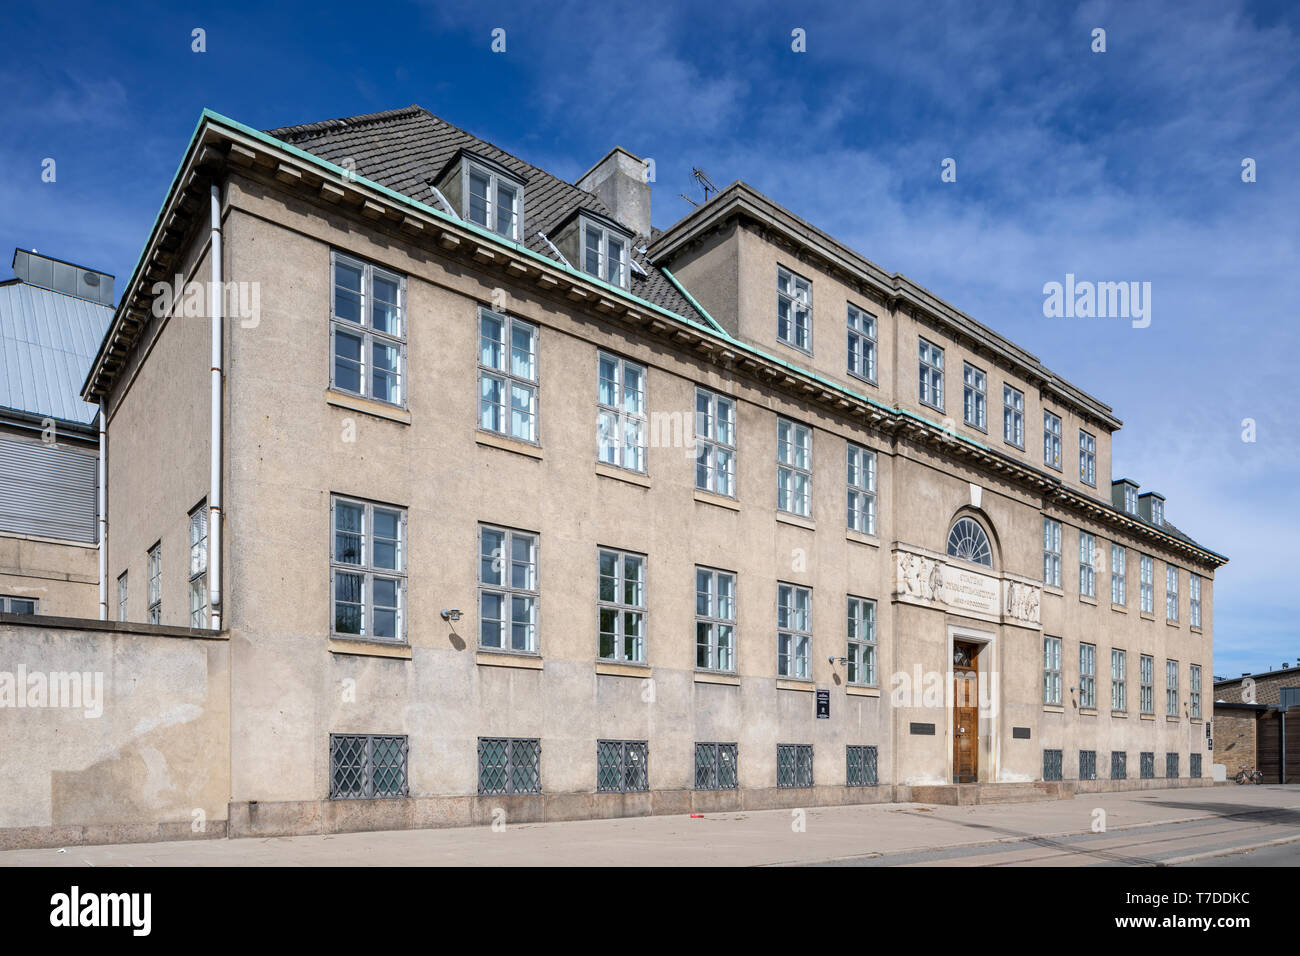 Institut for Idræt og Ernæring (Institute of Sports and Nutrition), North Campus, building designed by Carl Brummer, 1924; Copenhagen, Denmark Stock Photo